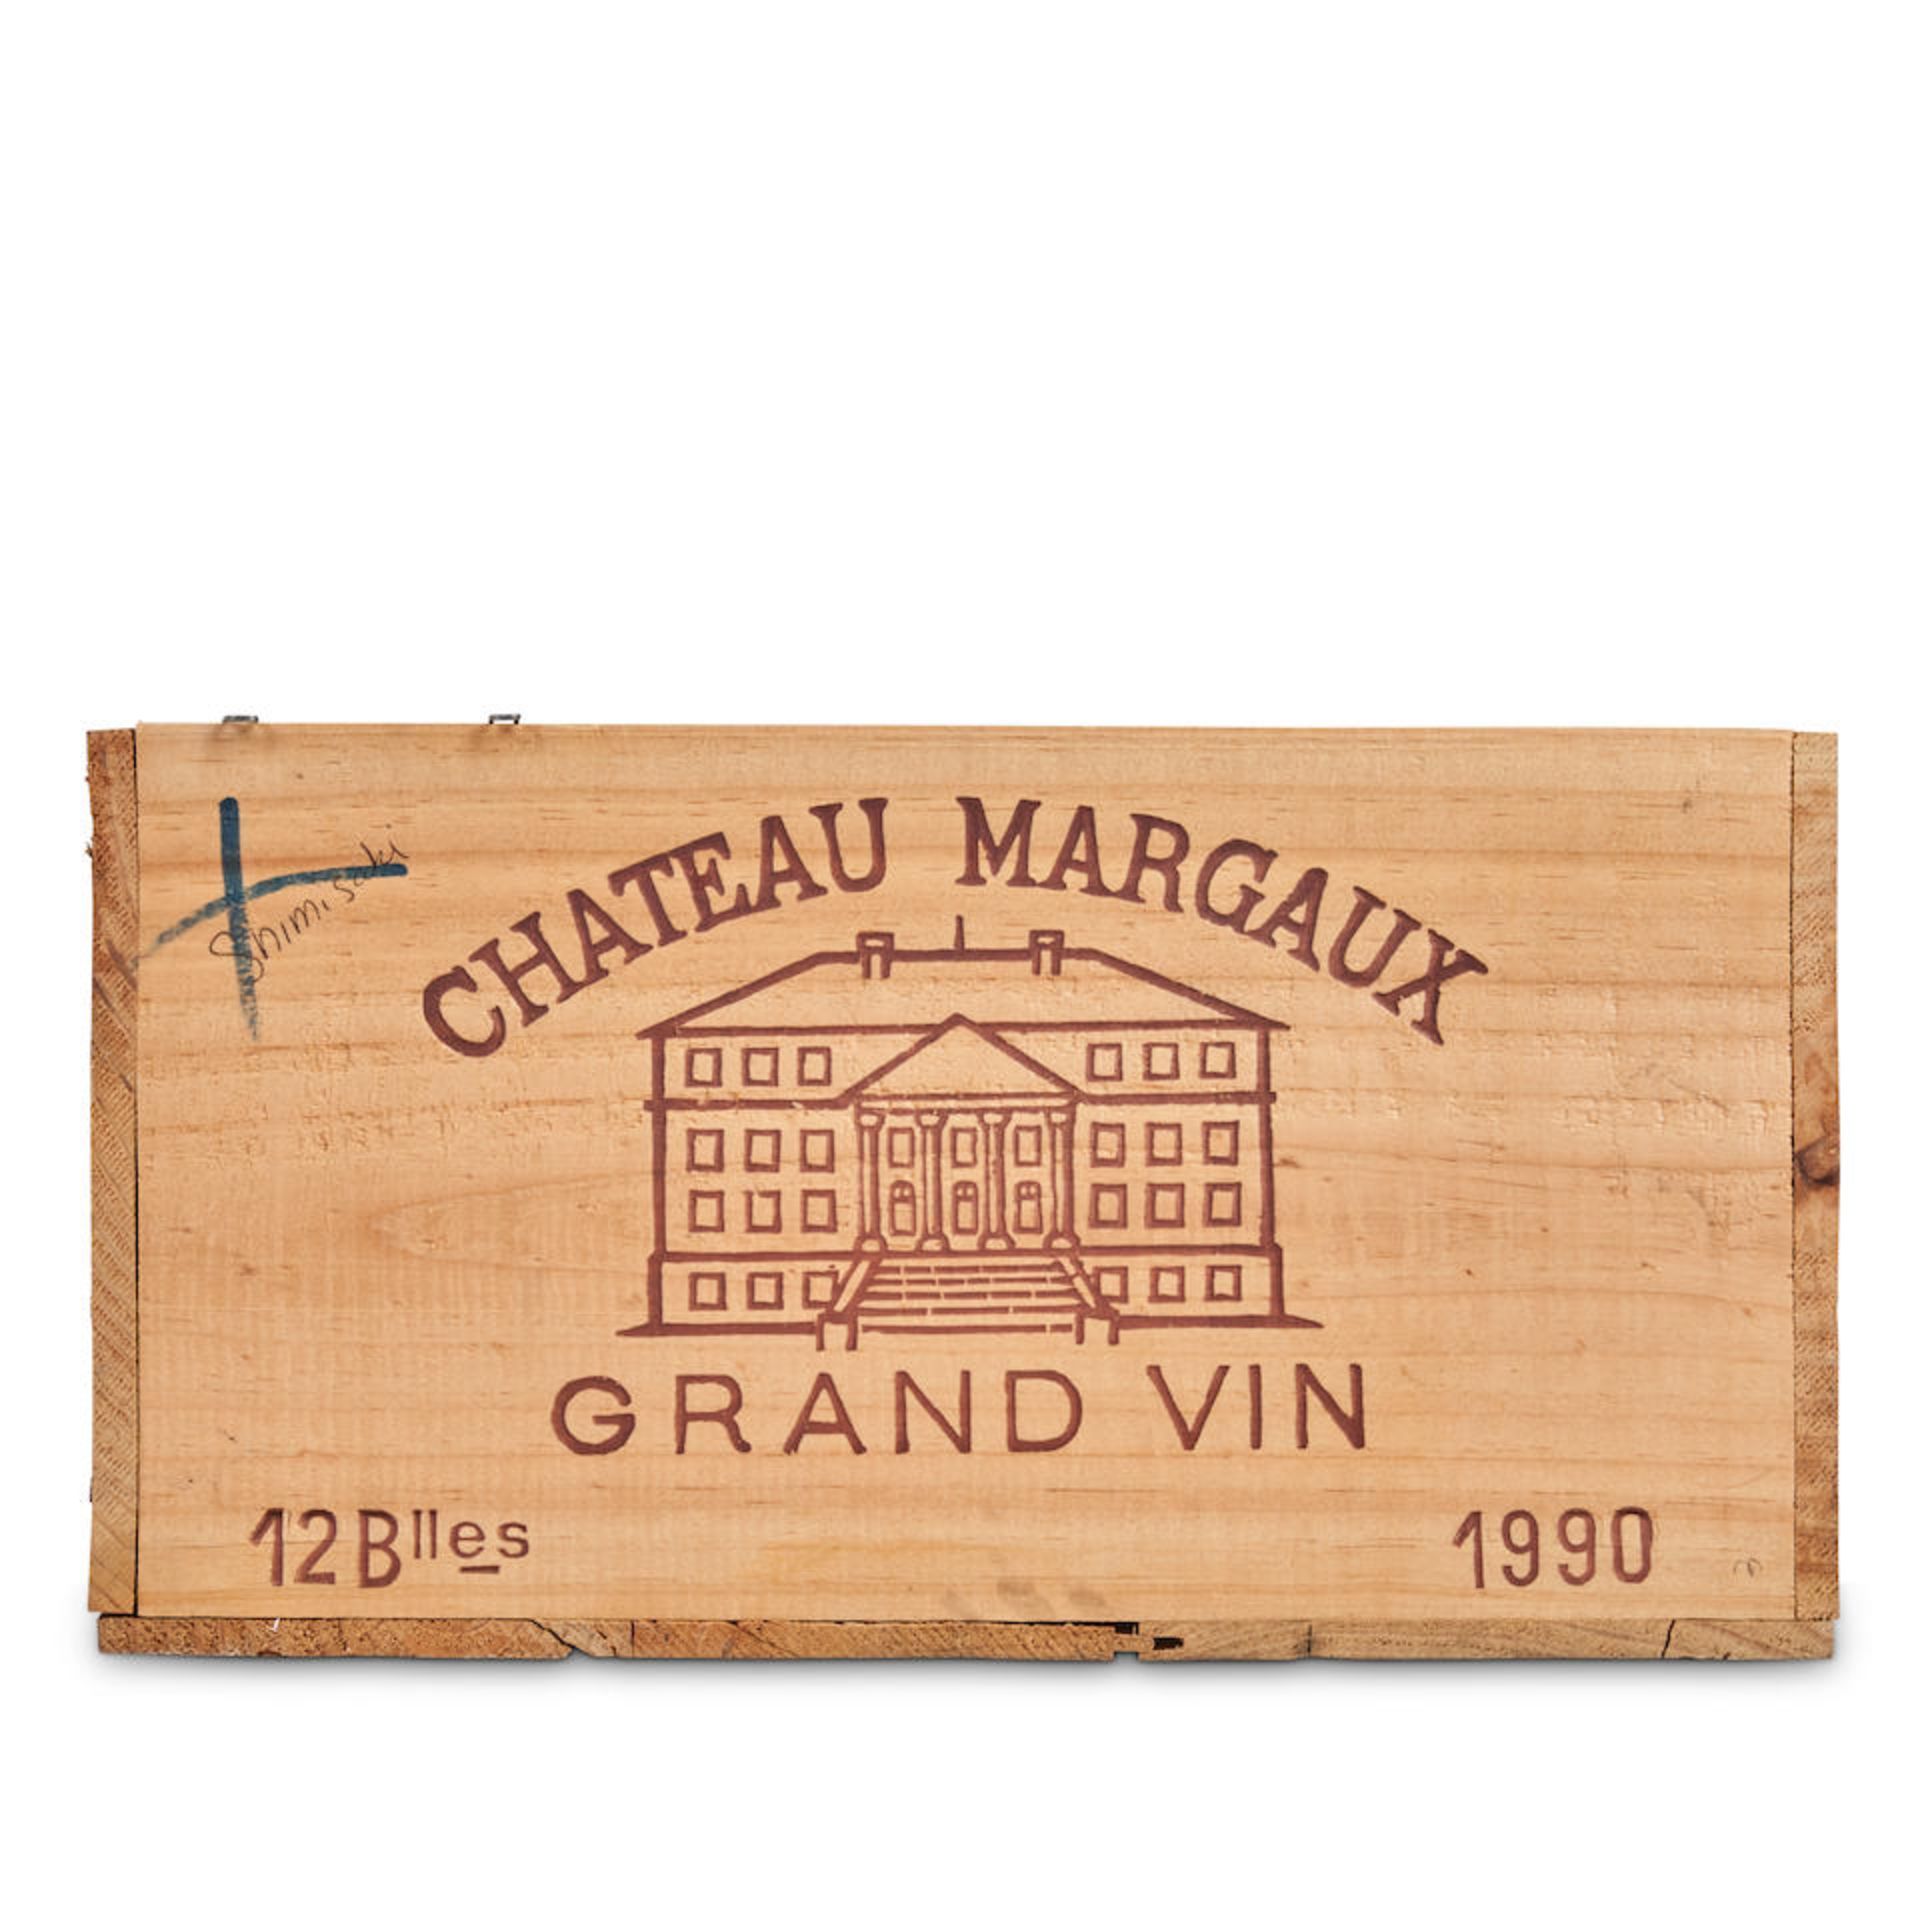 Chateau Margaux 1990 (12 bottles)